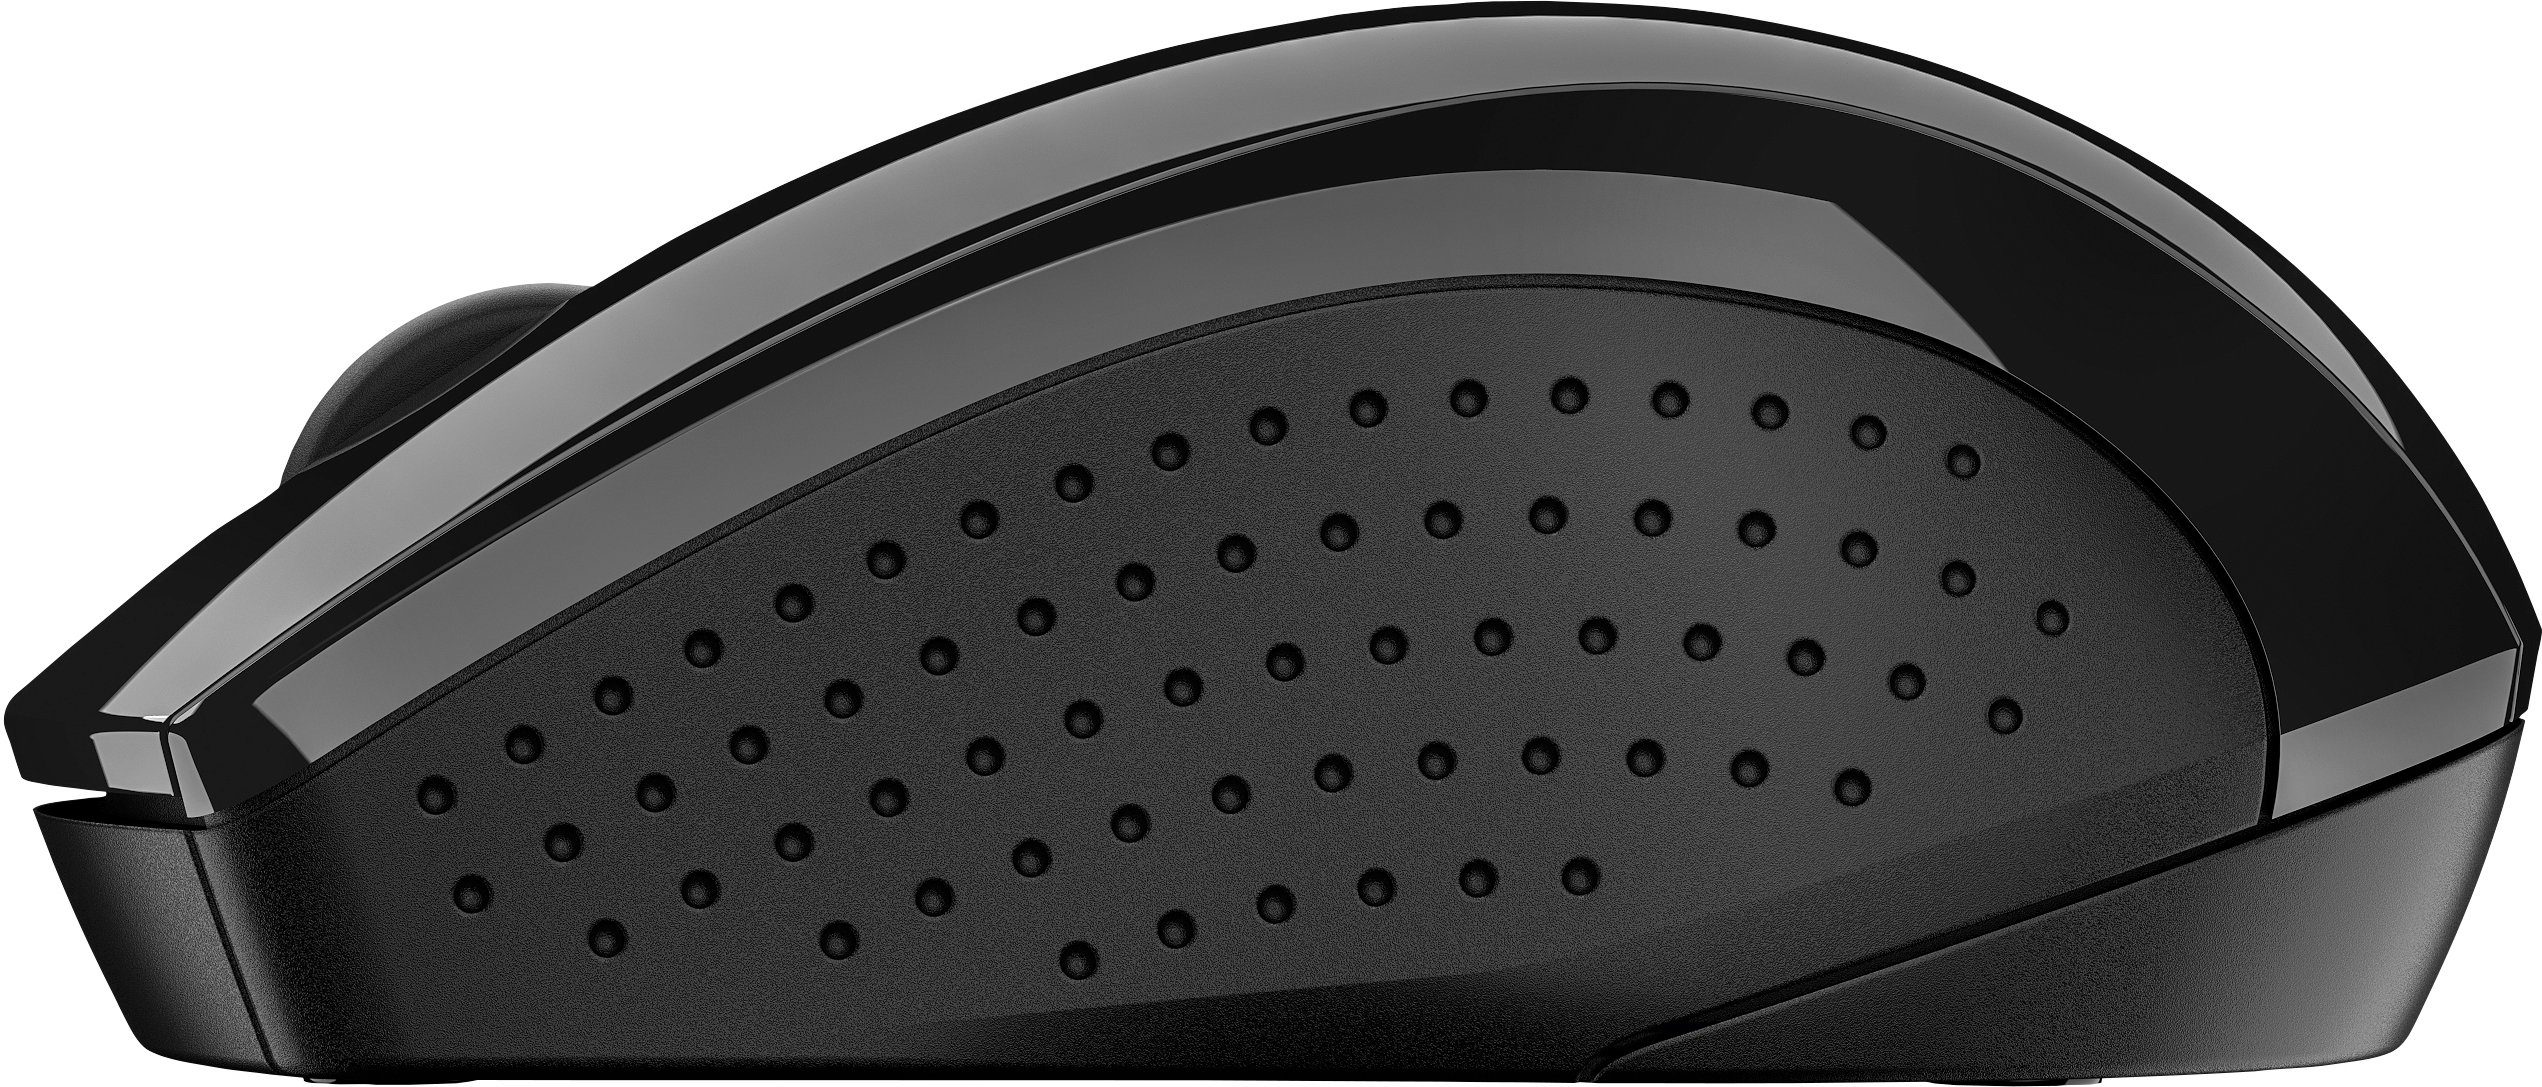 (RF HP Mouse 220 Silent Wireless) Wireless Maus